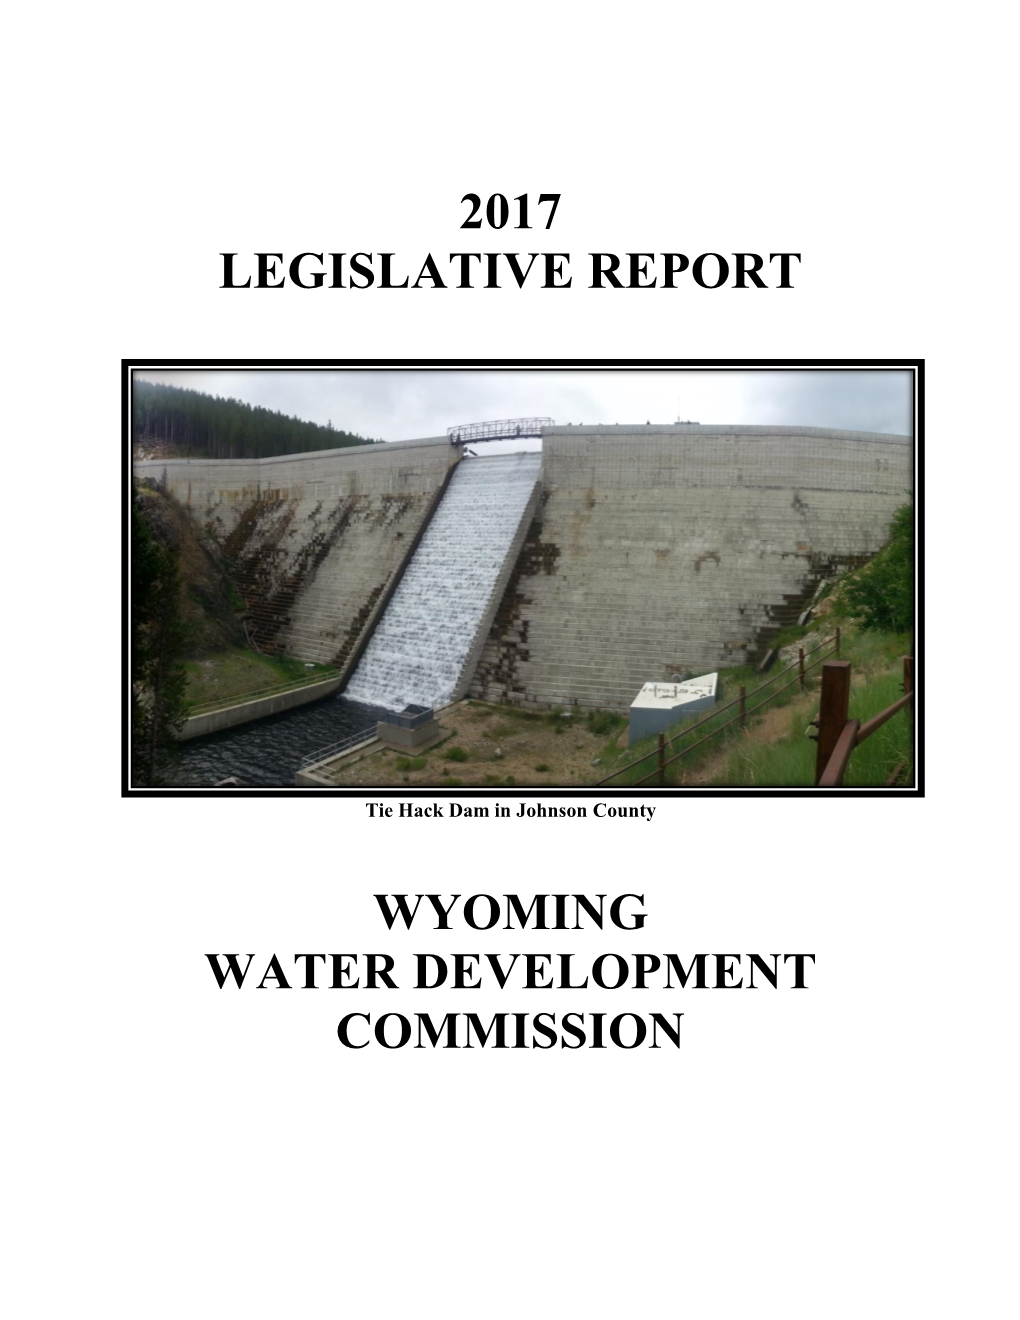 2017 Legislative Report Wyoming Water Development Program